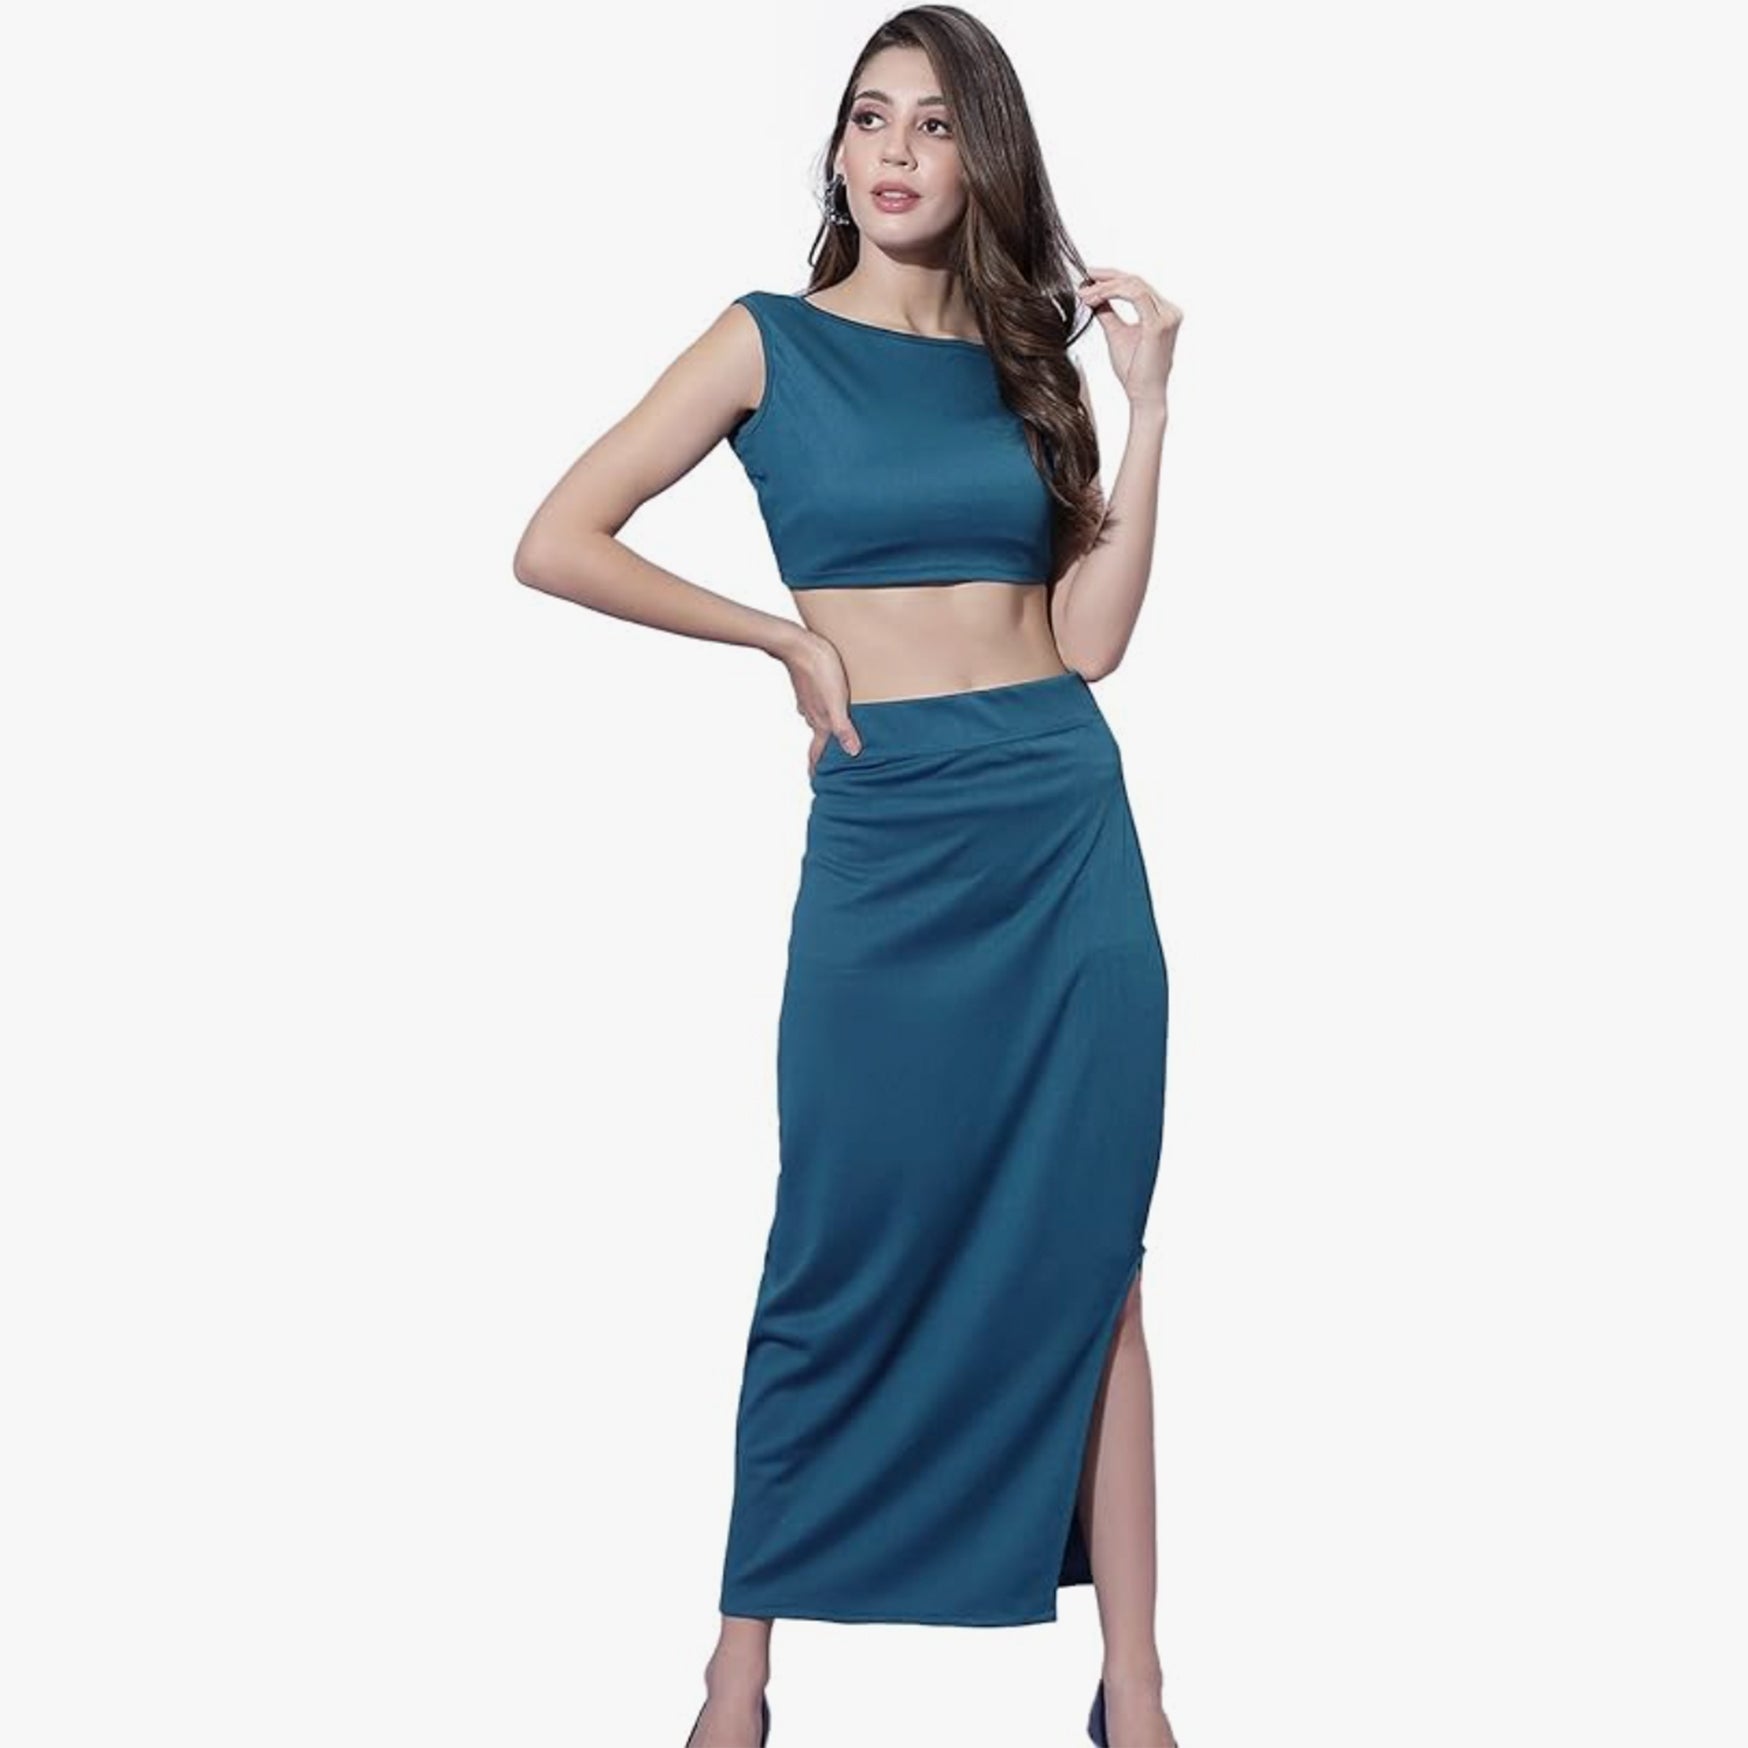 Selvia Women's Sleeveless Knitted Lycra Co-Ords Dress(353TK10162N-L_Teal Blue)